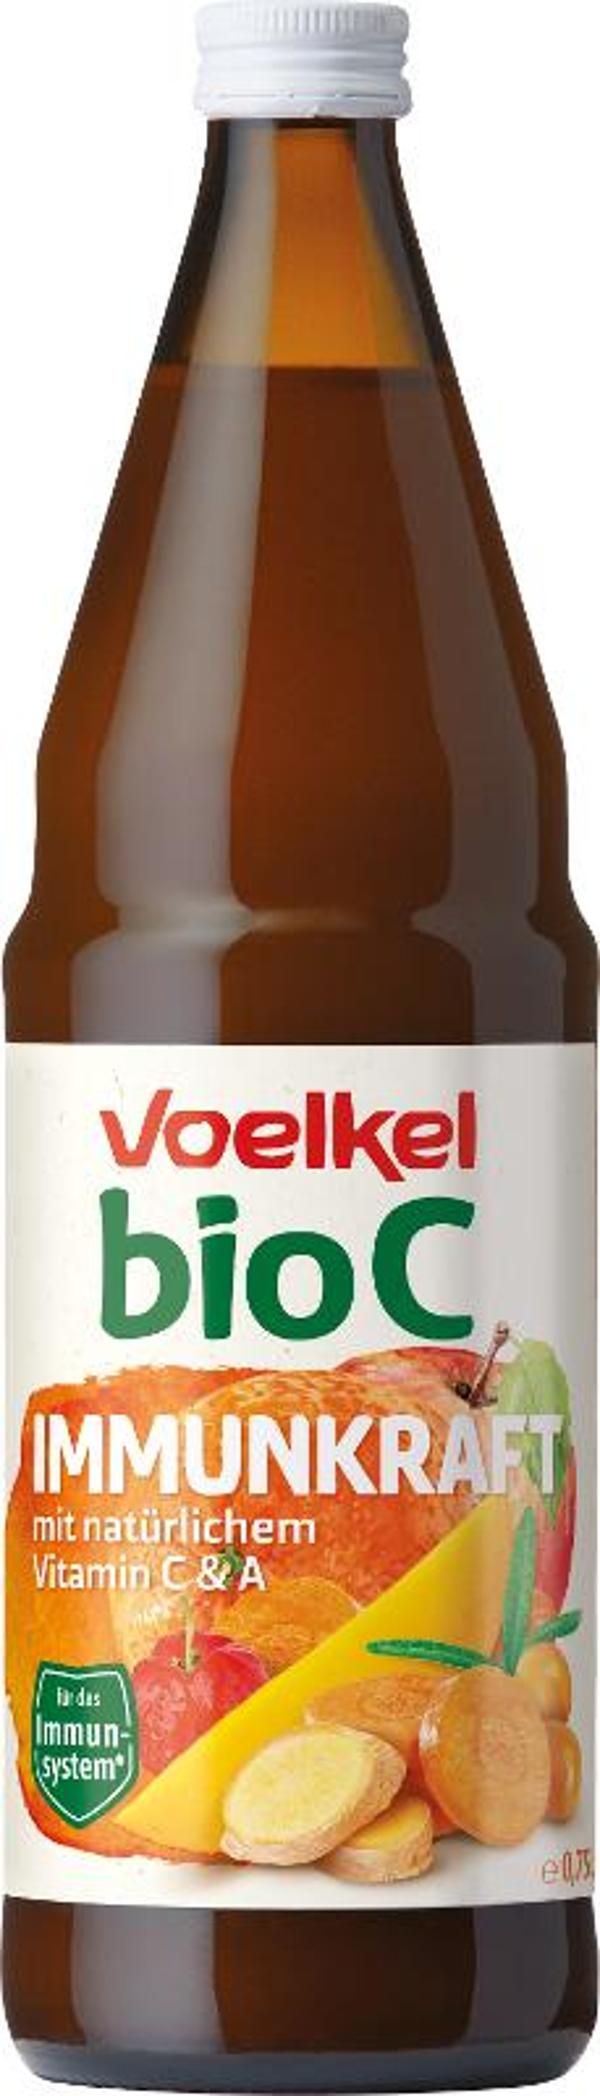 Produktfoto zu bioC Immunkraft